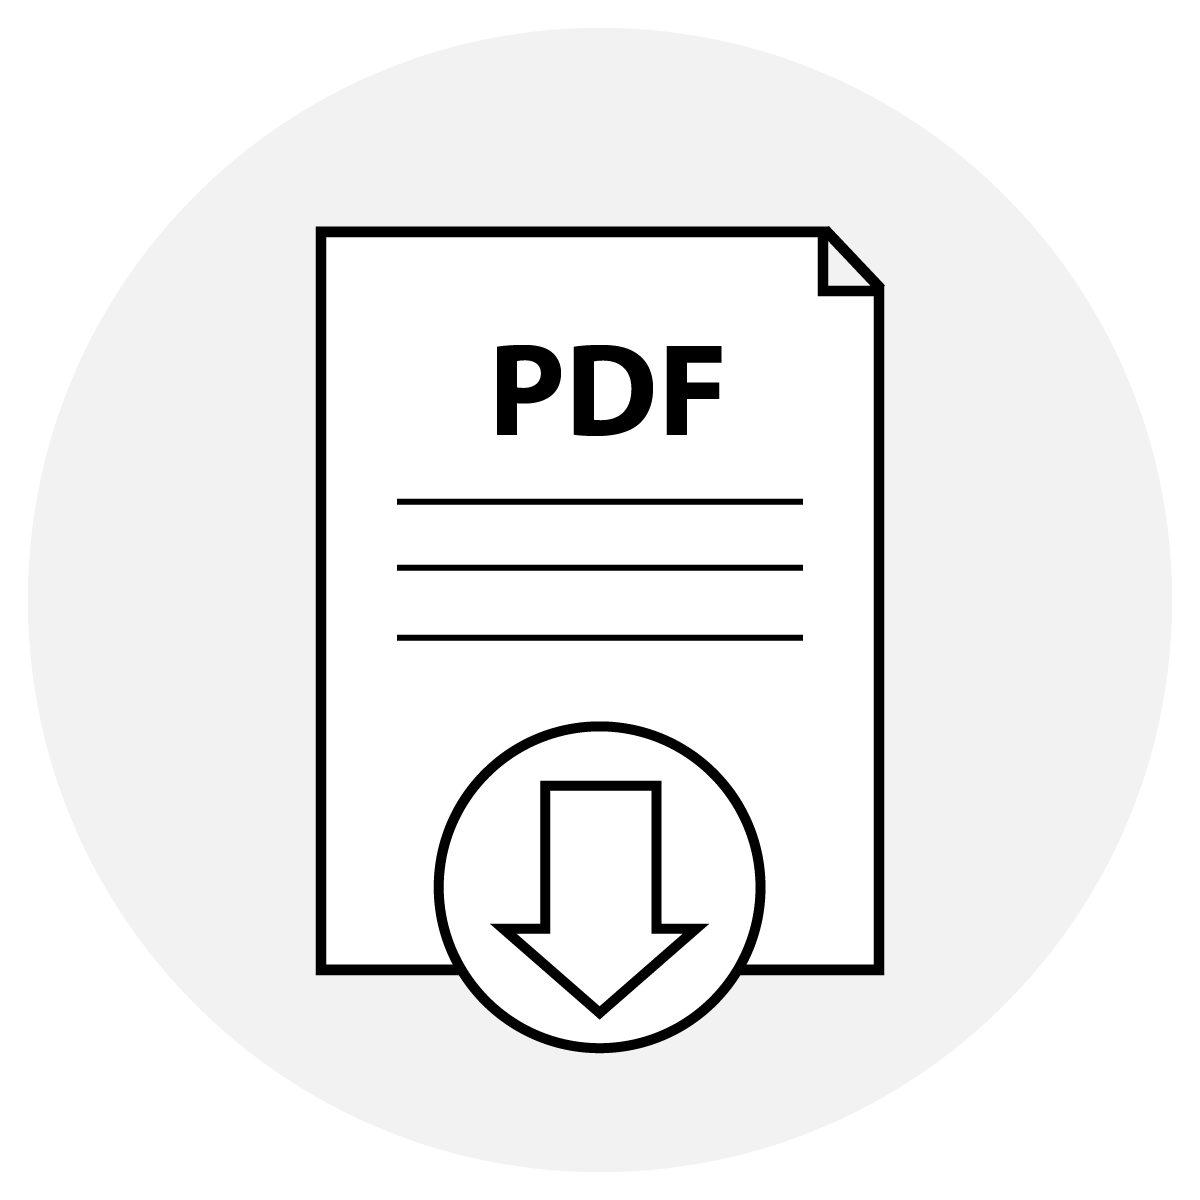 Download the PDF icon